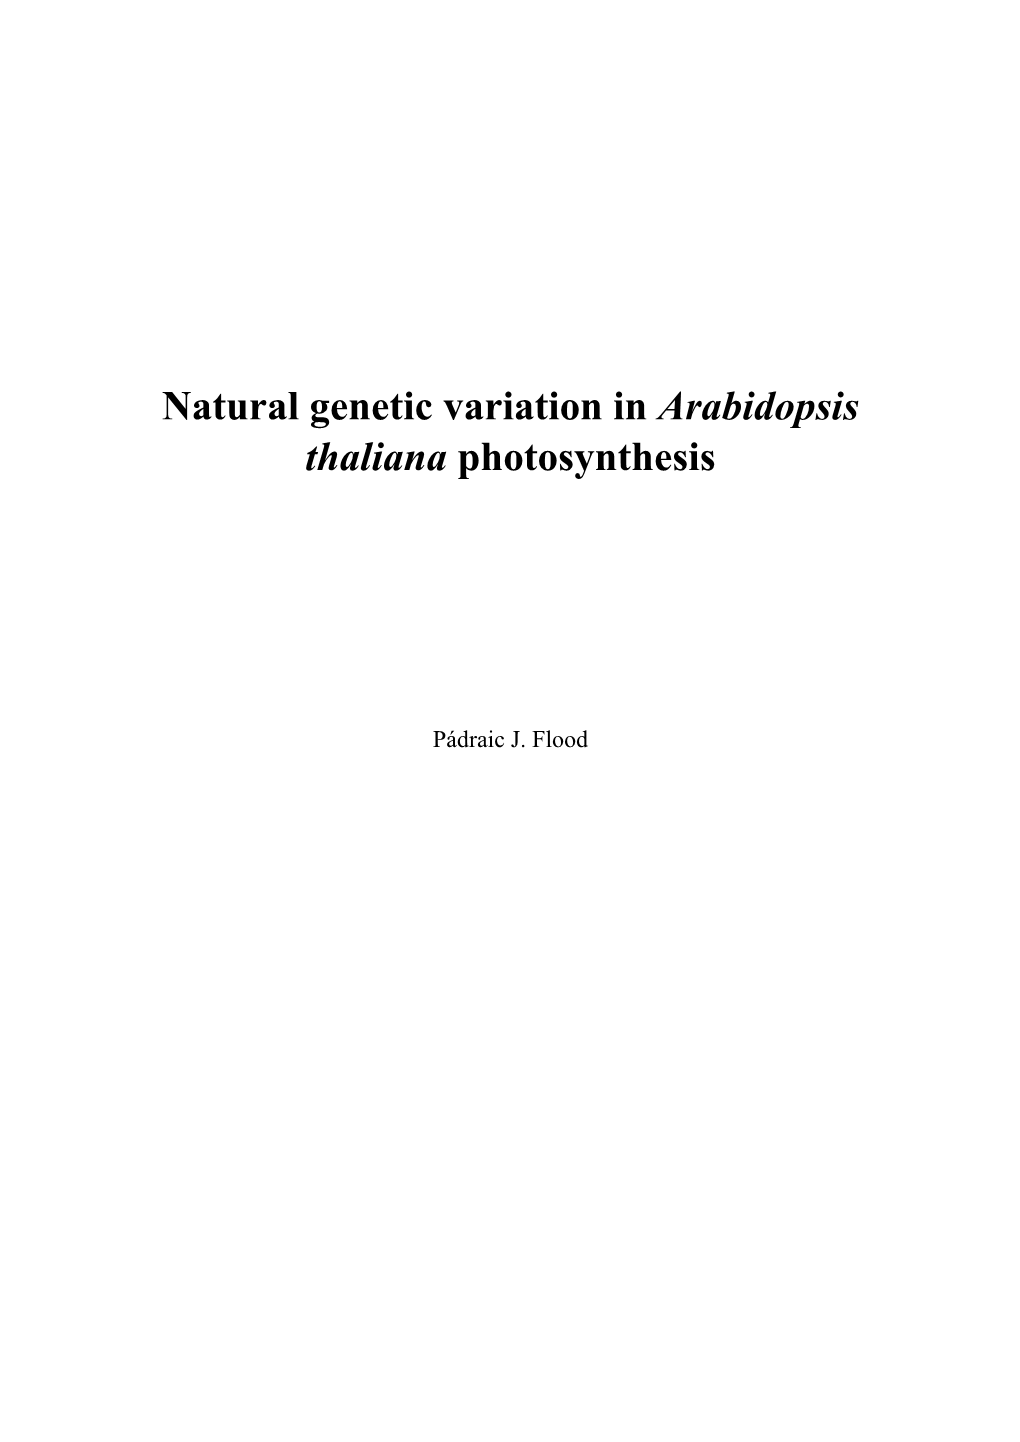 Natural Genetic Variation in Arabidopsis Thaliana Photosynthesis